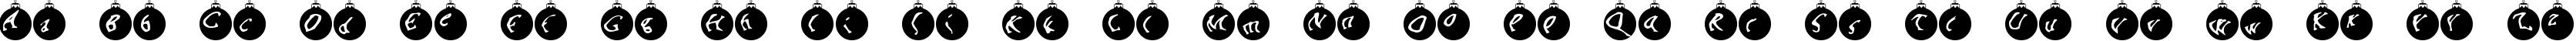 Пример написания английского алфавита шрифтом OrnaMental